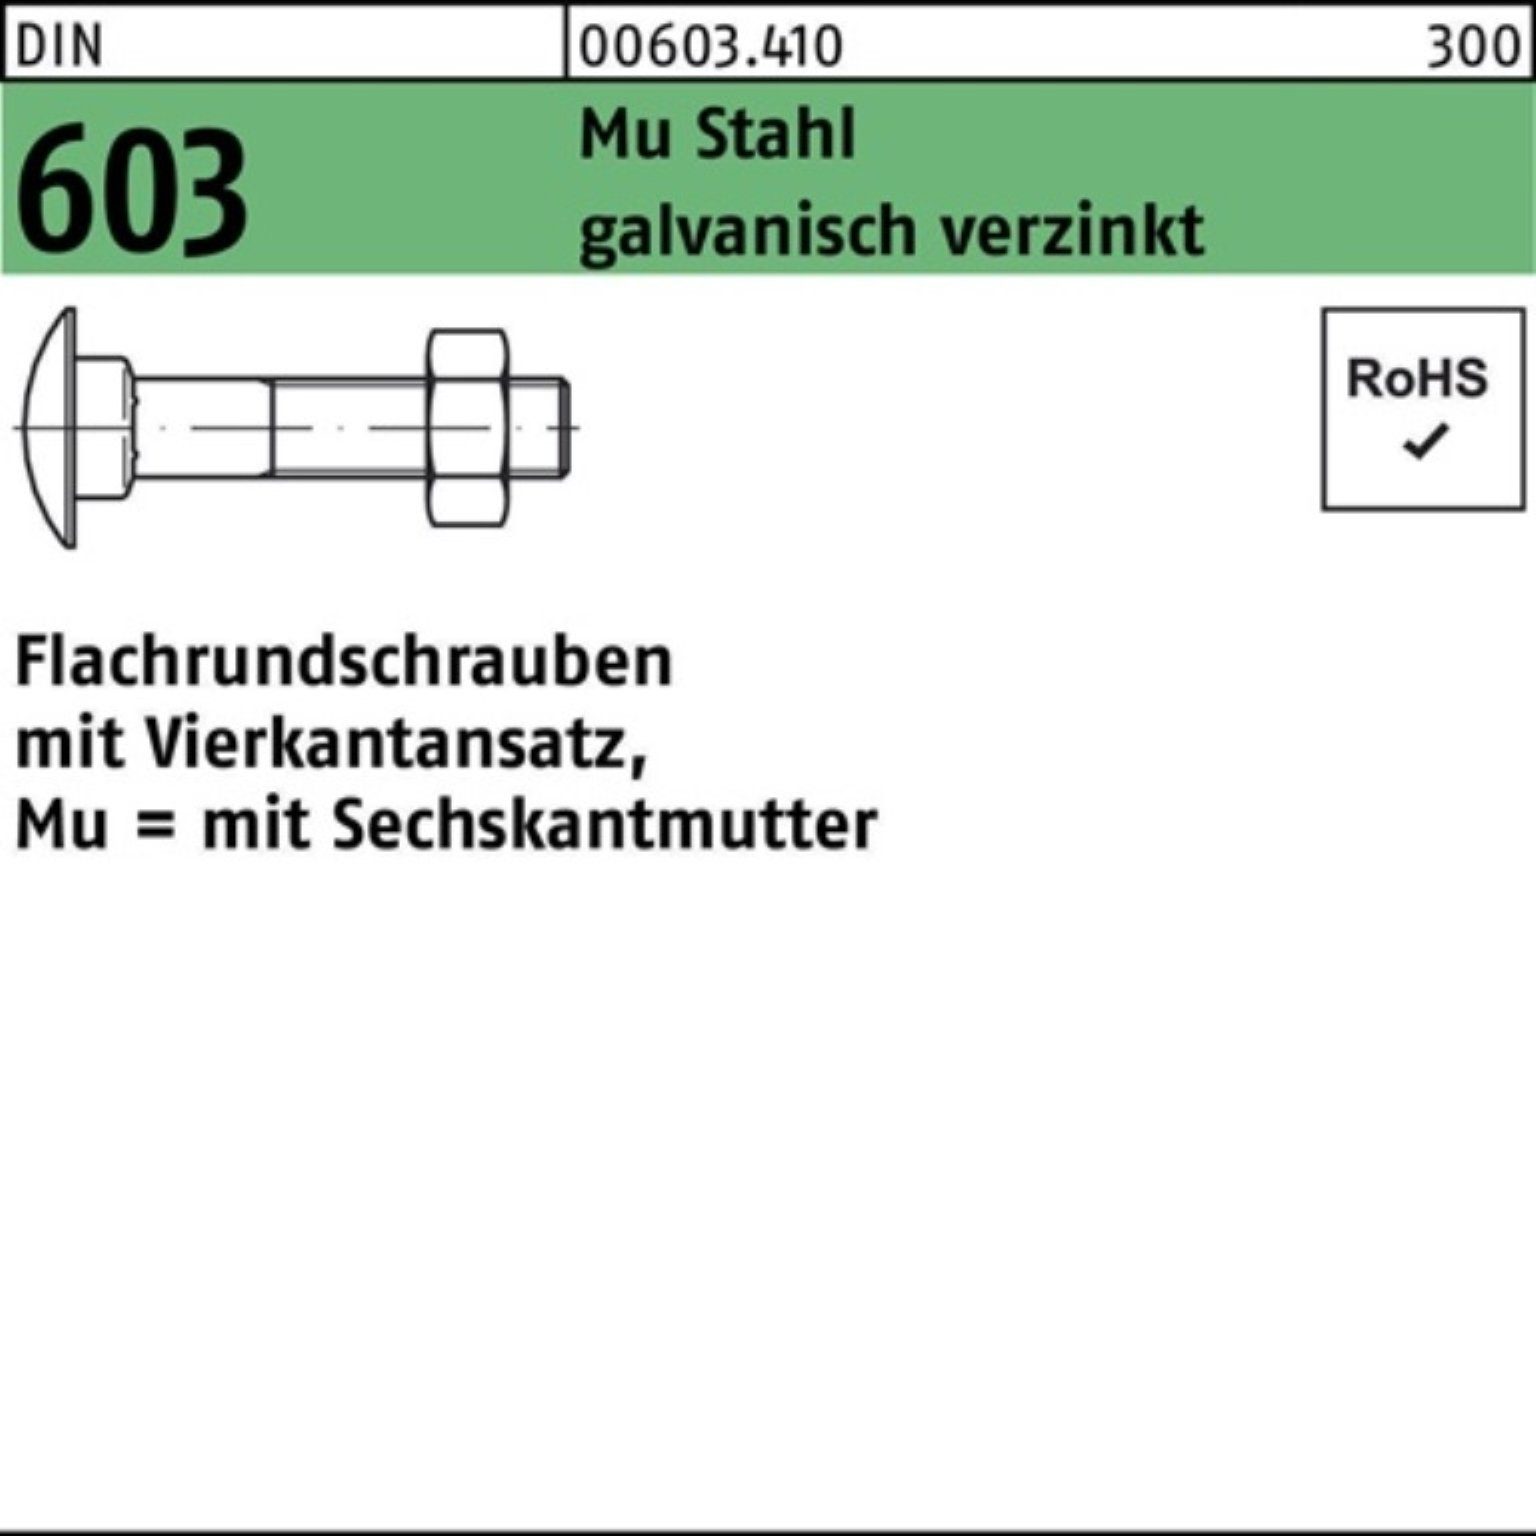 Reyher Schraube 200er Pack Flachrundschraube DIN 603 Vierkantansatz/6-ktmutter M8x55 M